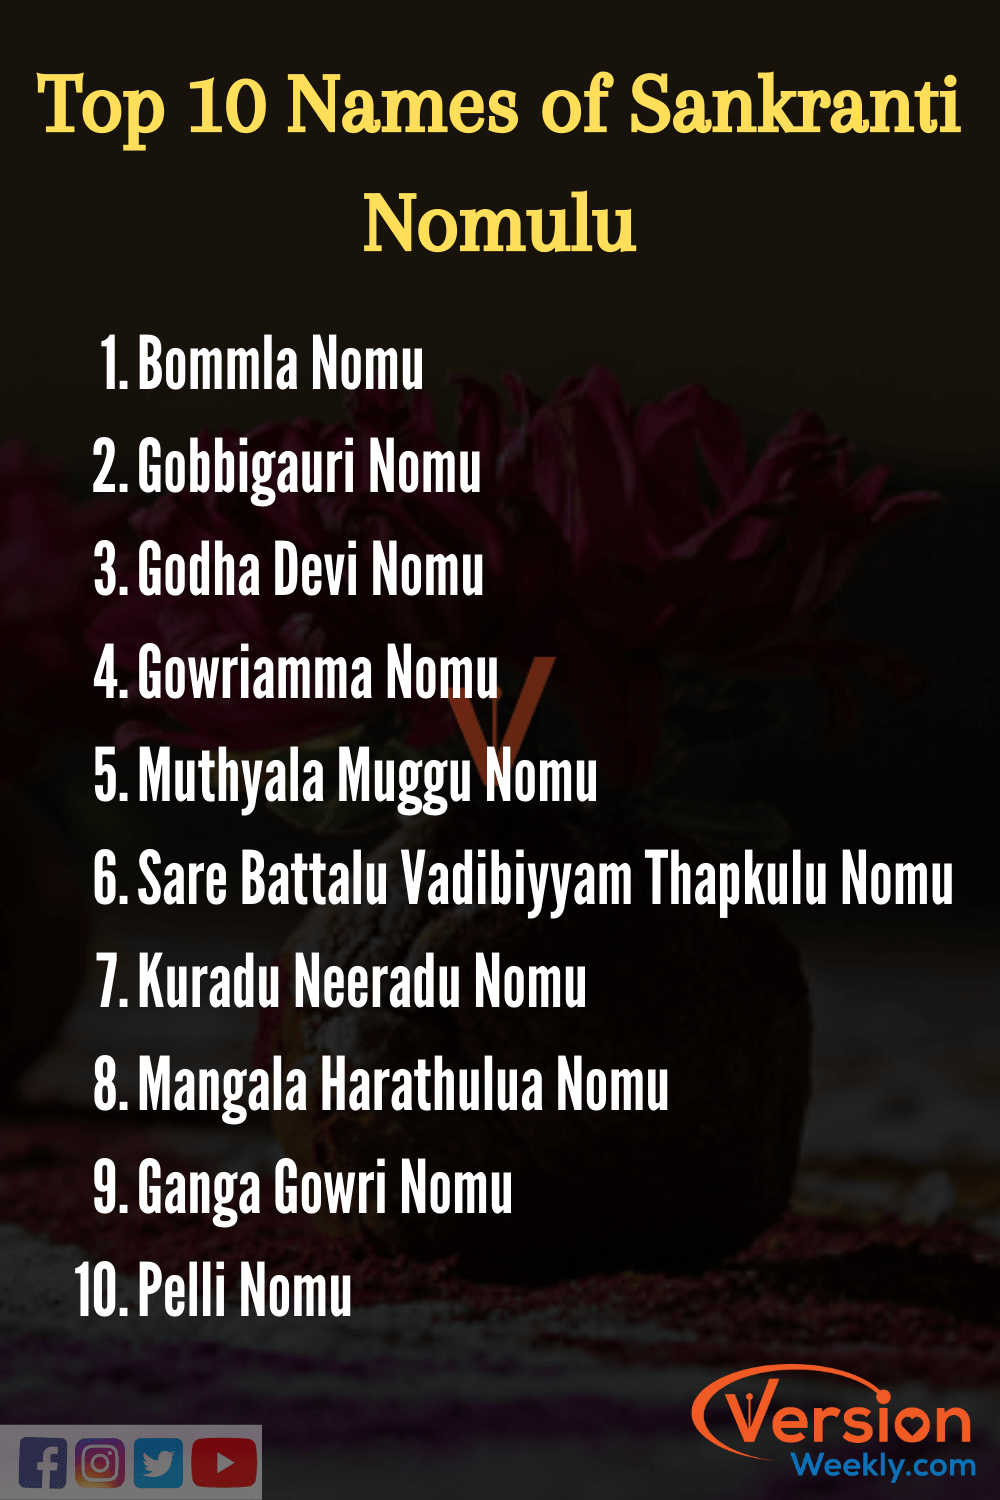 top 10 names of Sankranti nomulu 2021